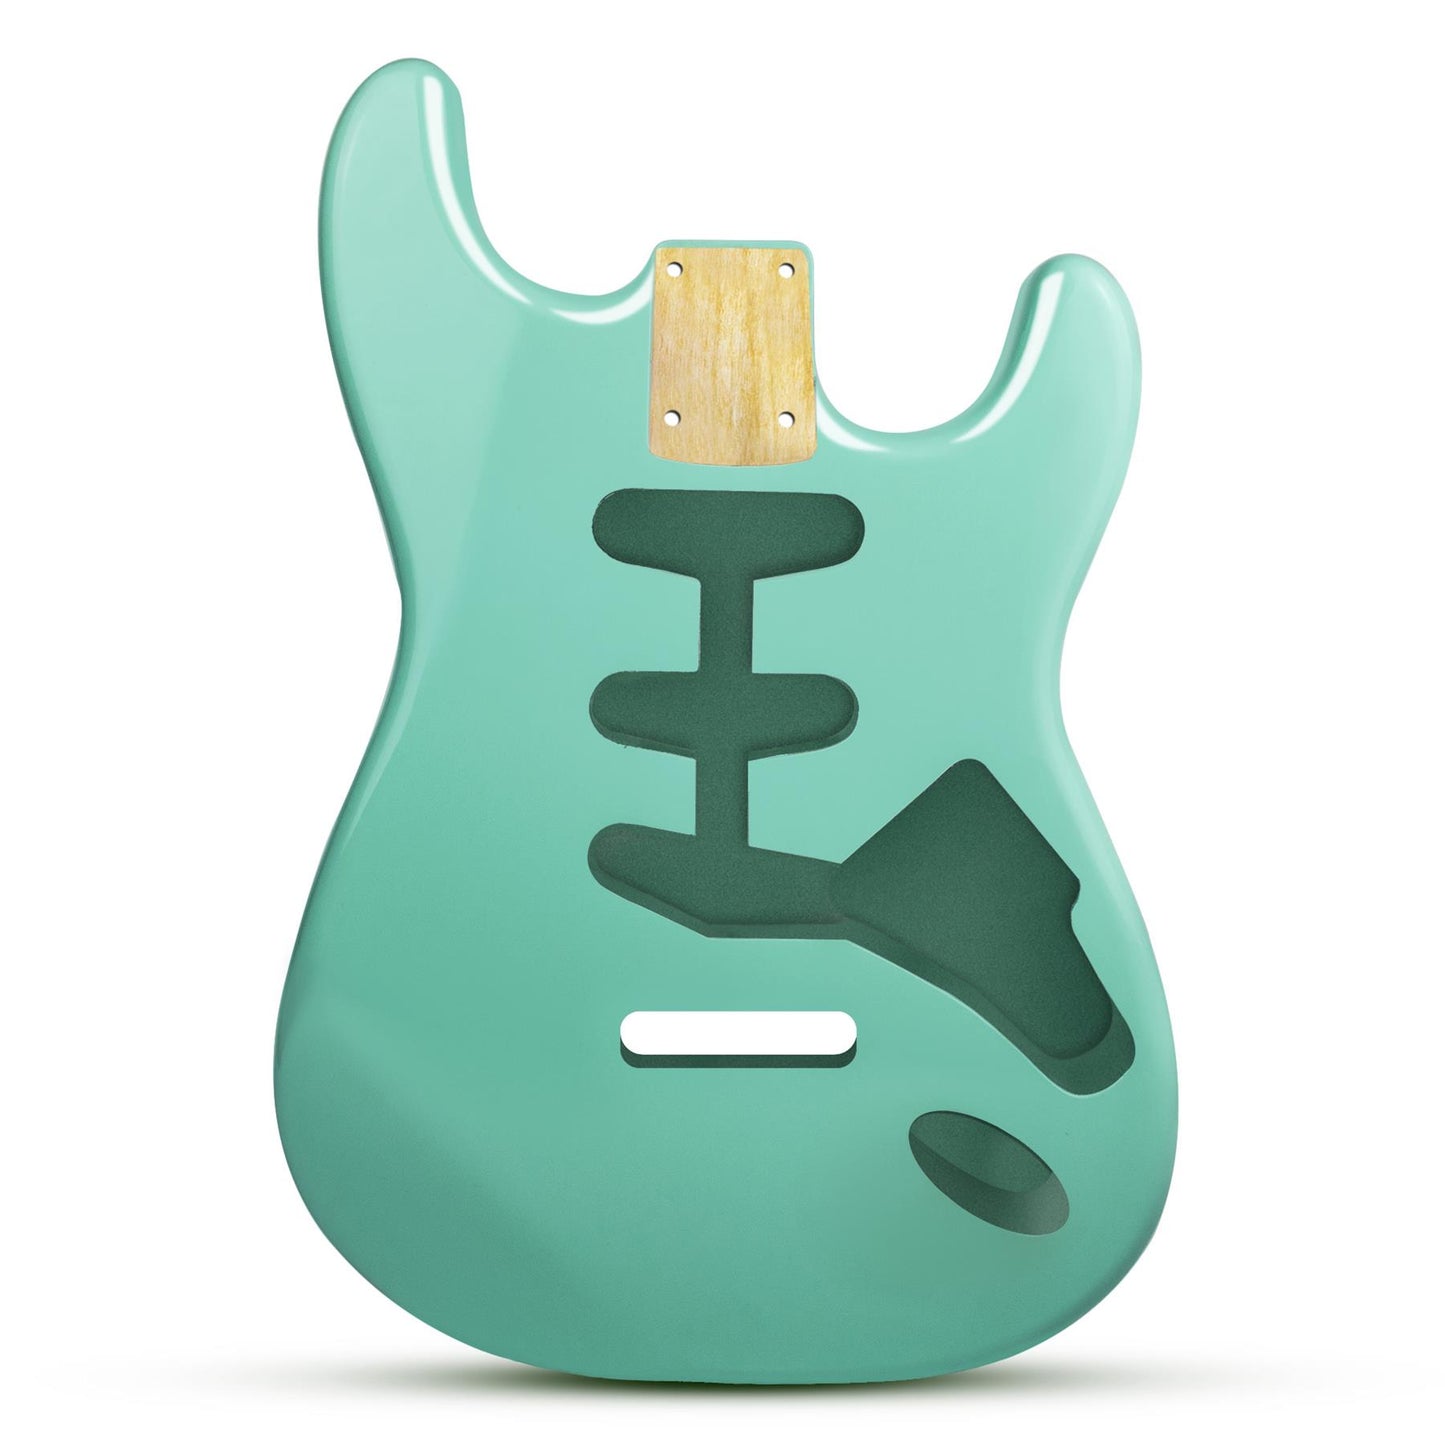 Seafoam Green Nitrocellulose Guitar Paint / Lacquer 400ml